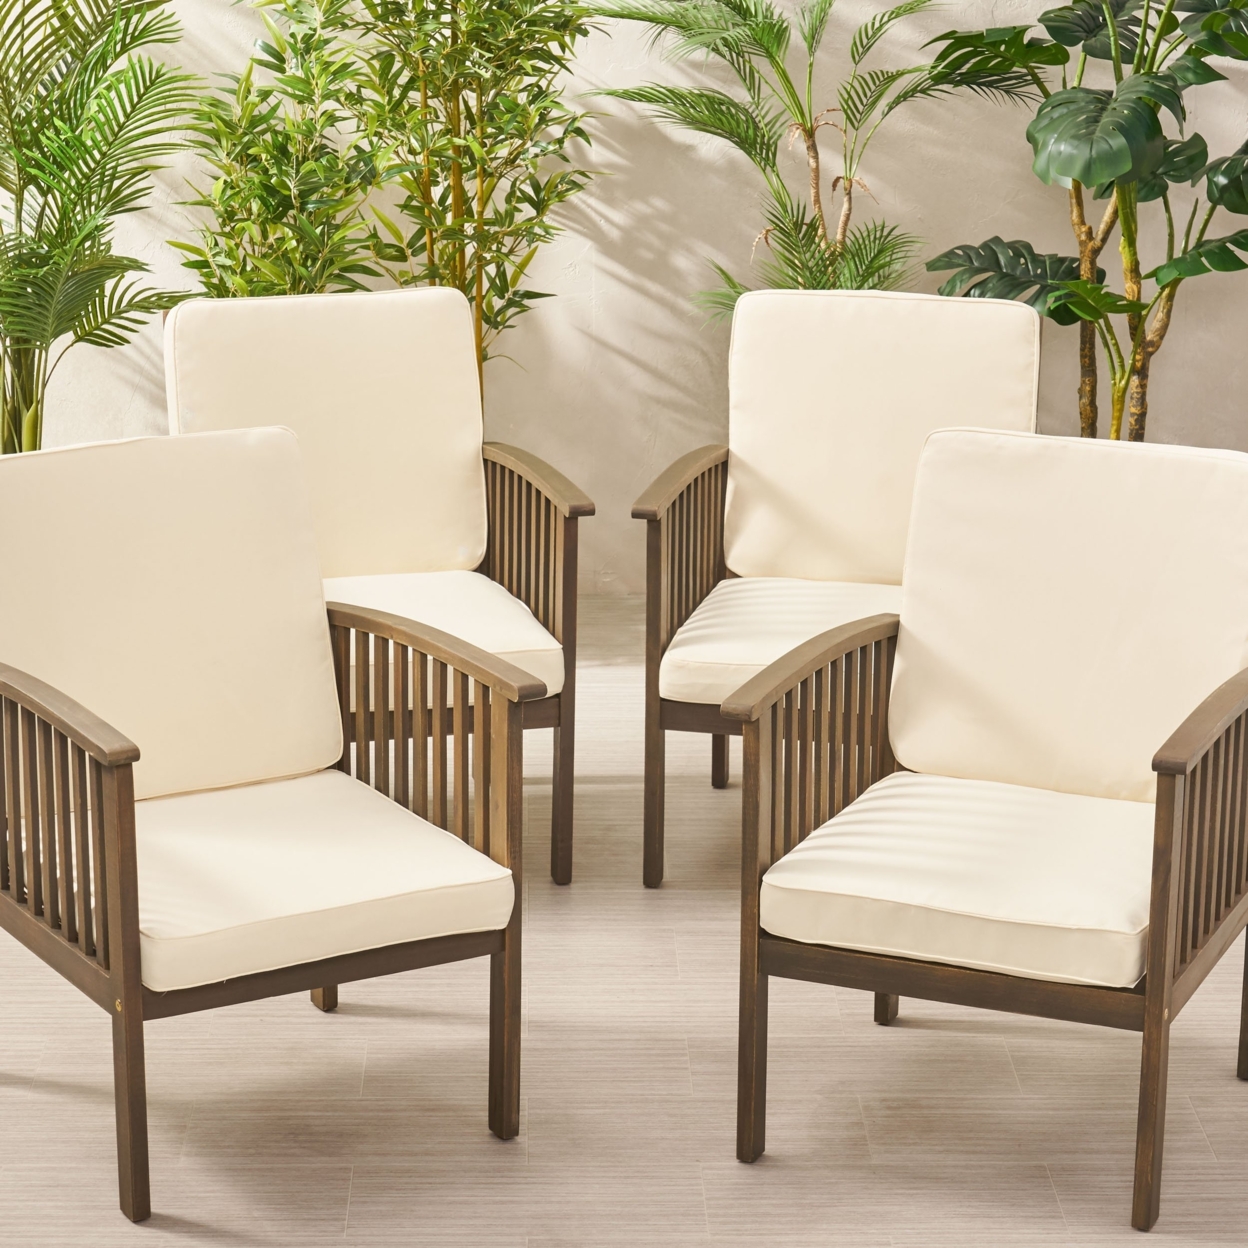 Eydan Outdoor Water Resistant Fabric Club Chair Cushions (Set Of 4) - Cream